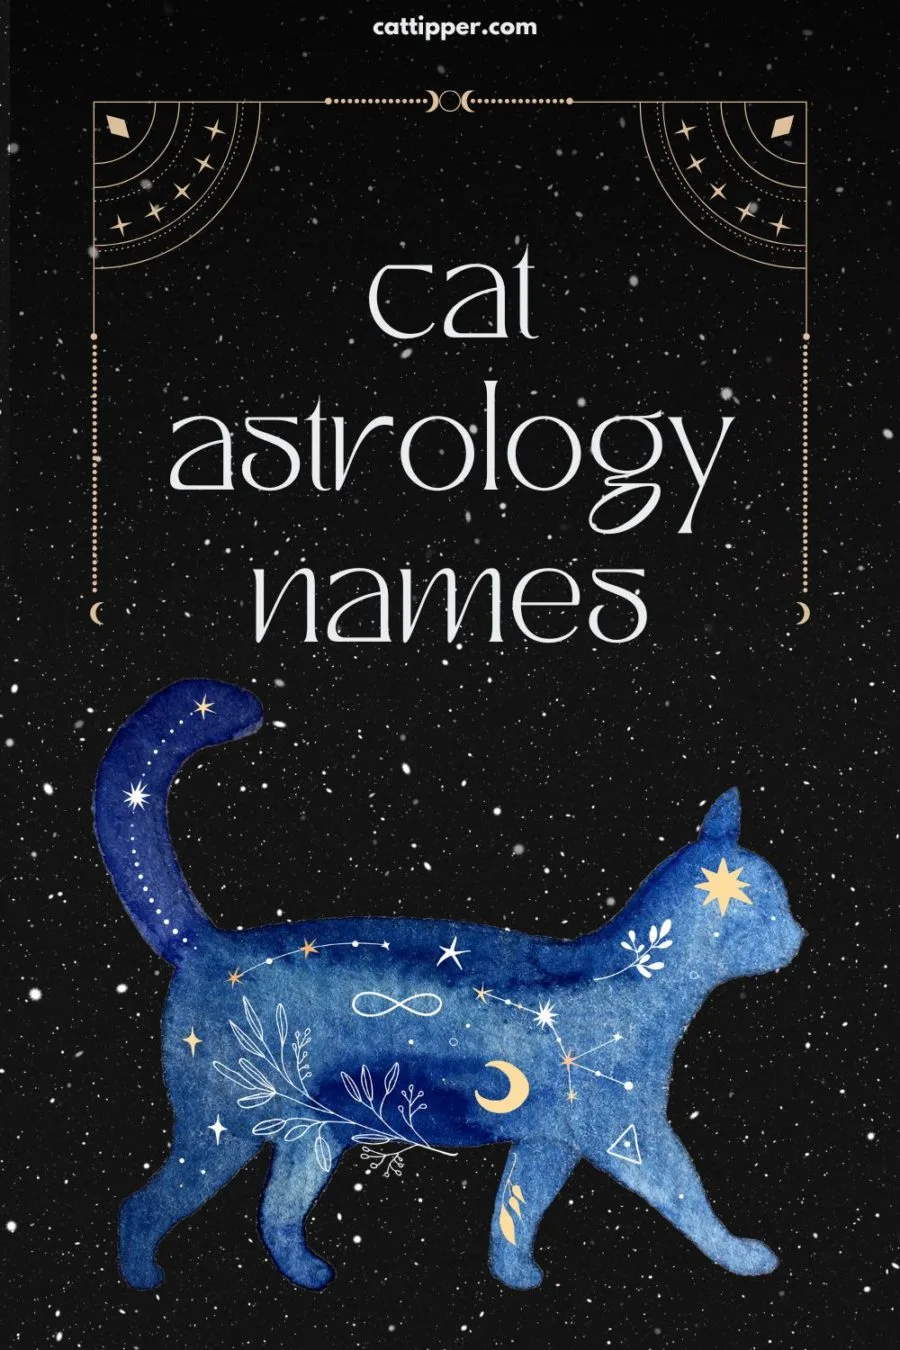 Astrology Cat Names